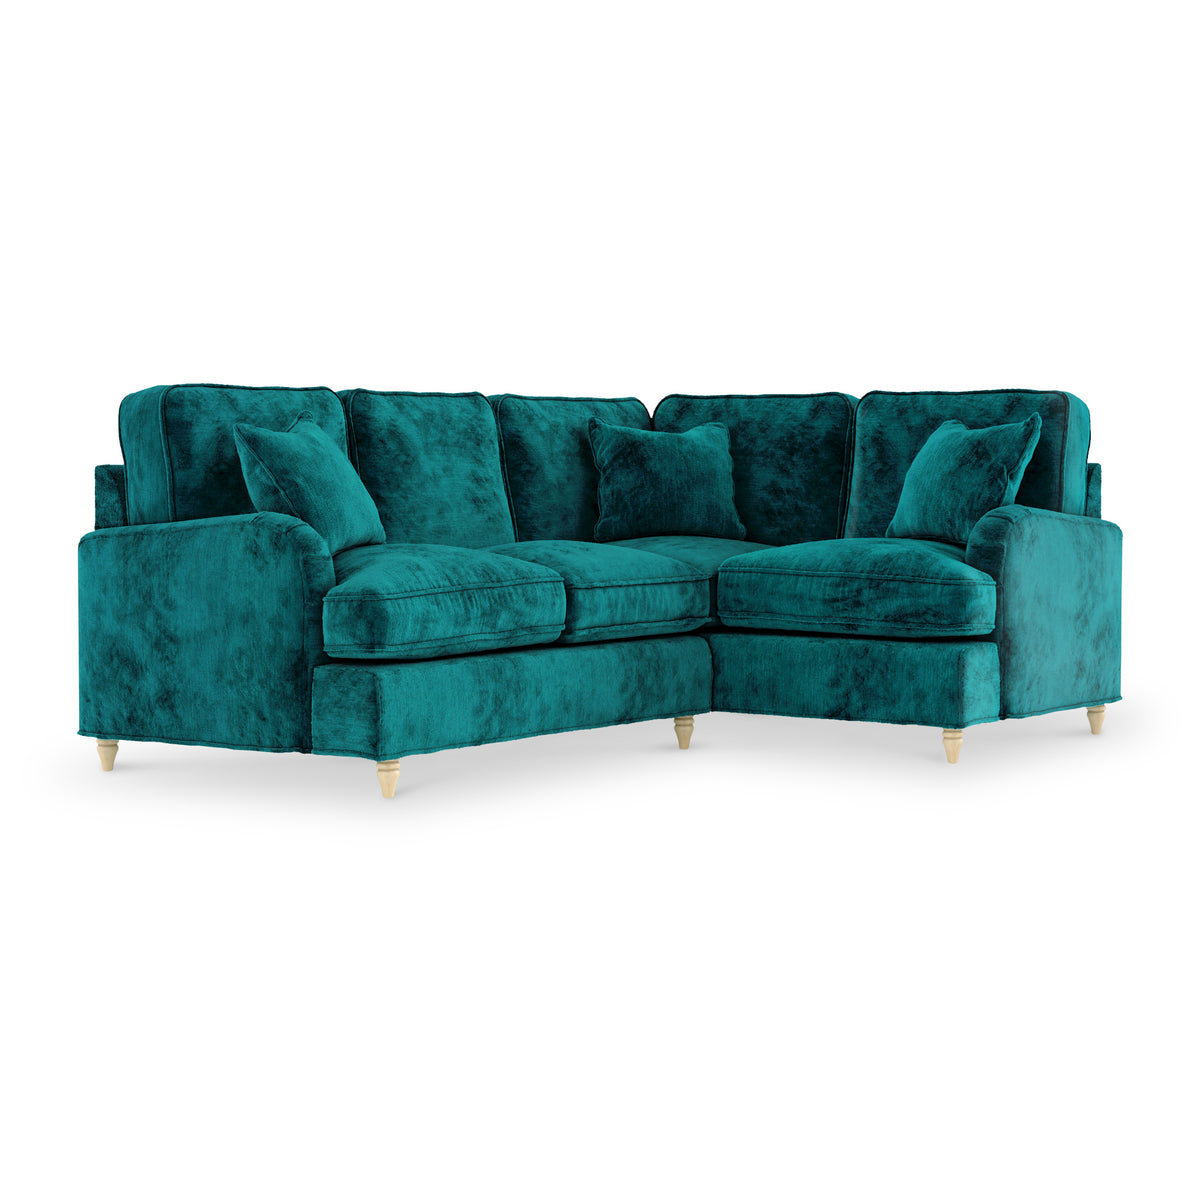 Arthur Emerald Green RH Corner Sofa from roseland furniture